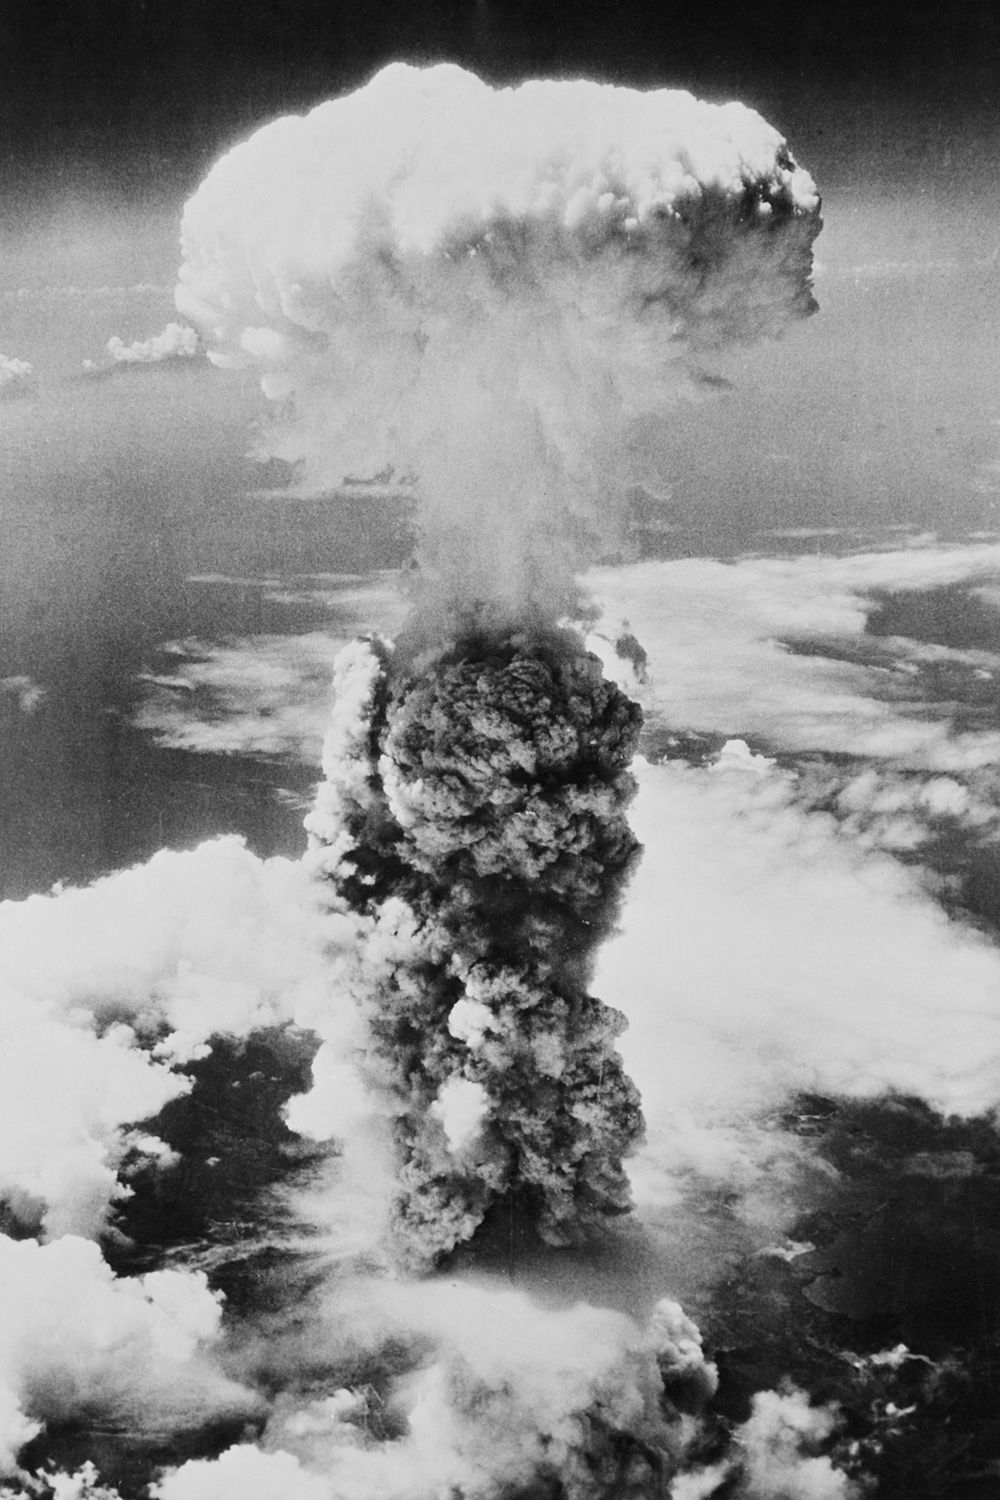 atomic bombings of hiroshima and nagasaki